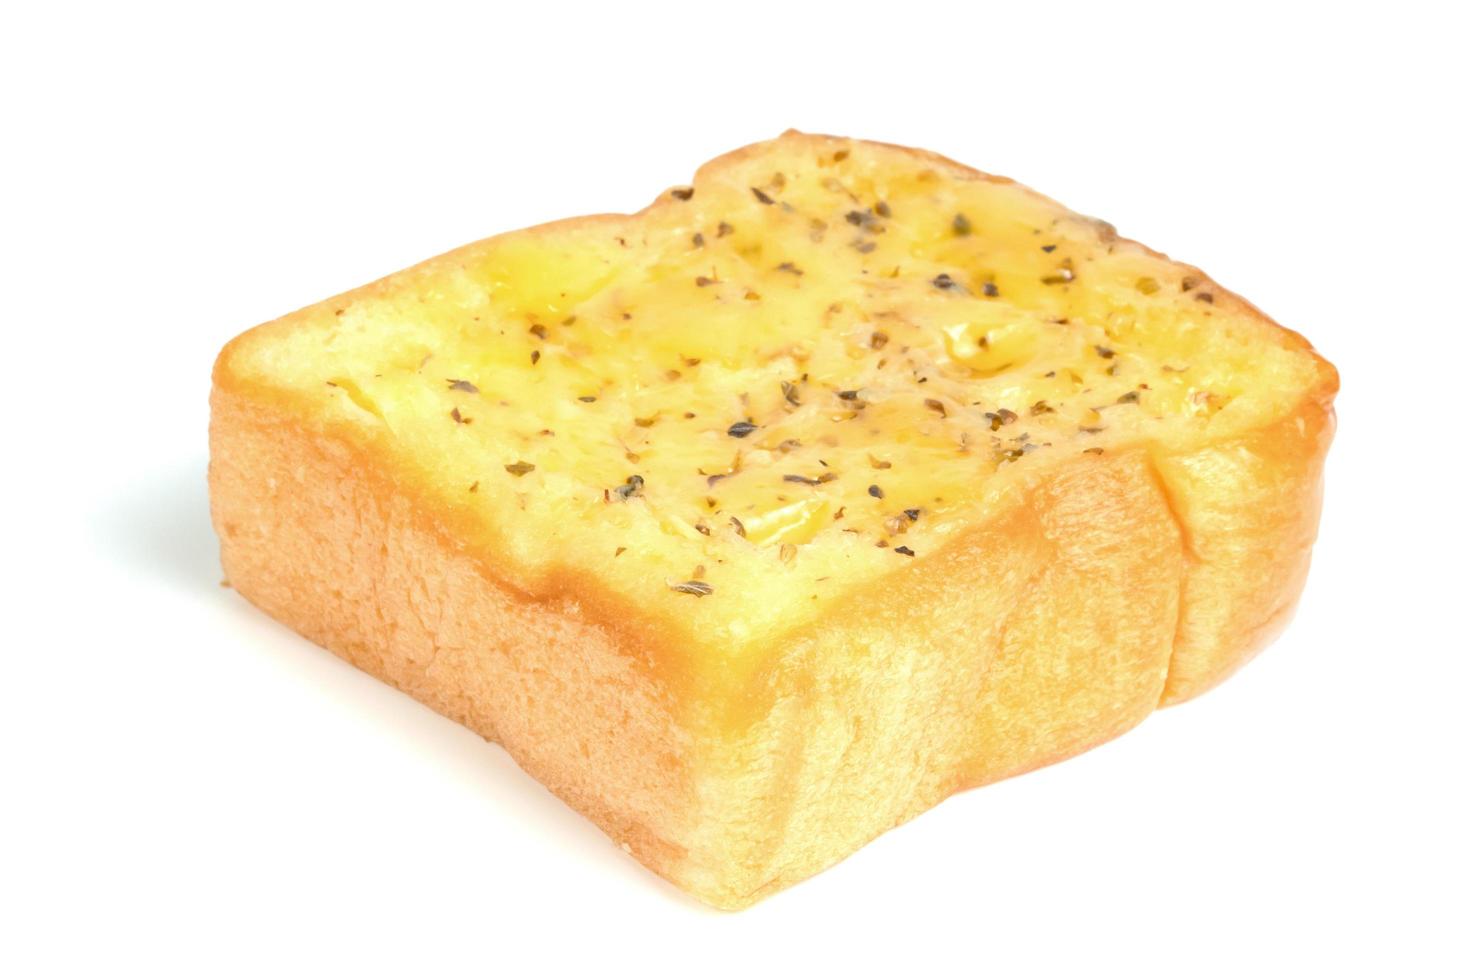 knoflookbrood met kaas geïsoleerd op witte achtergrond foto